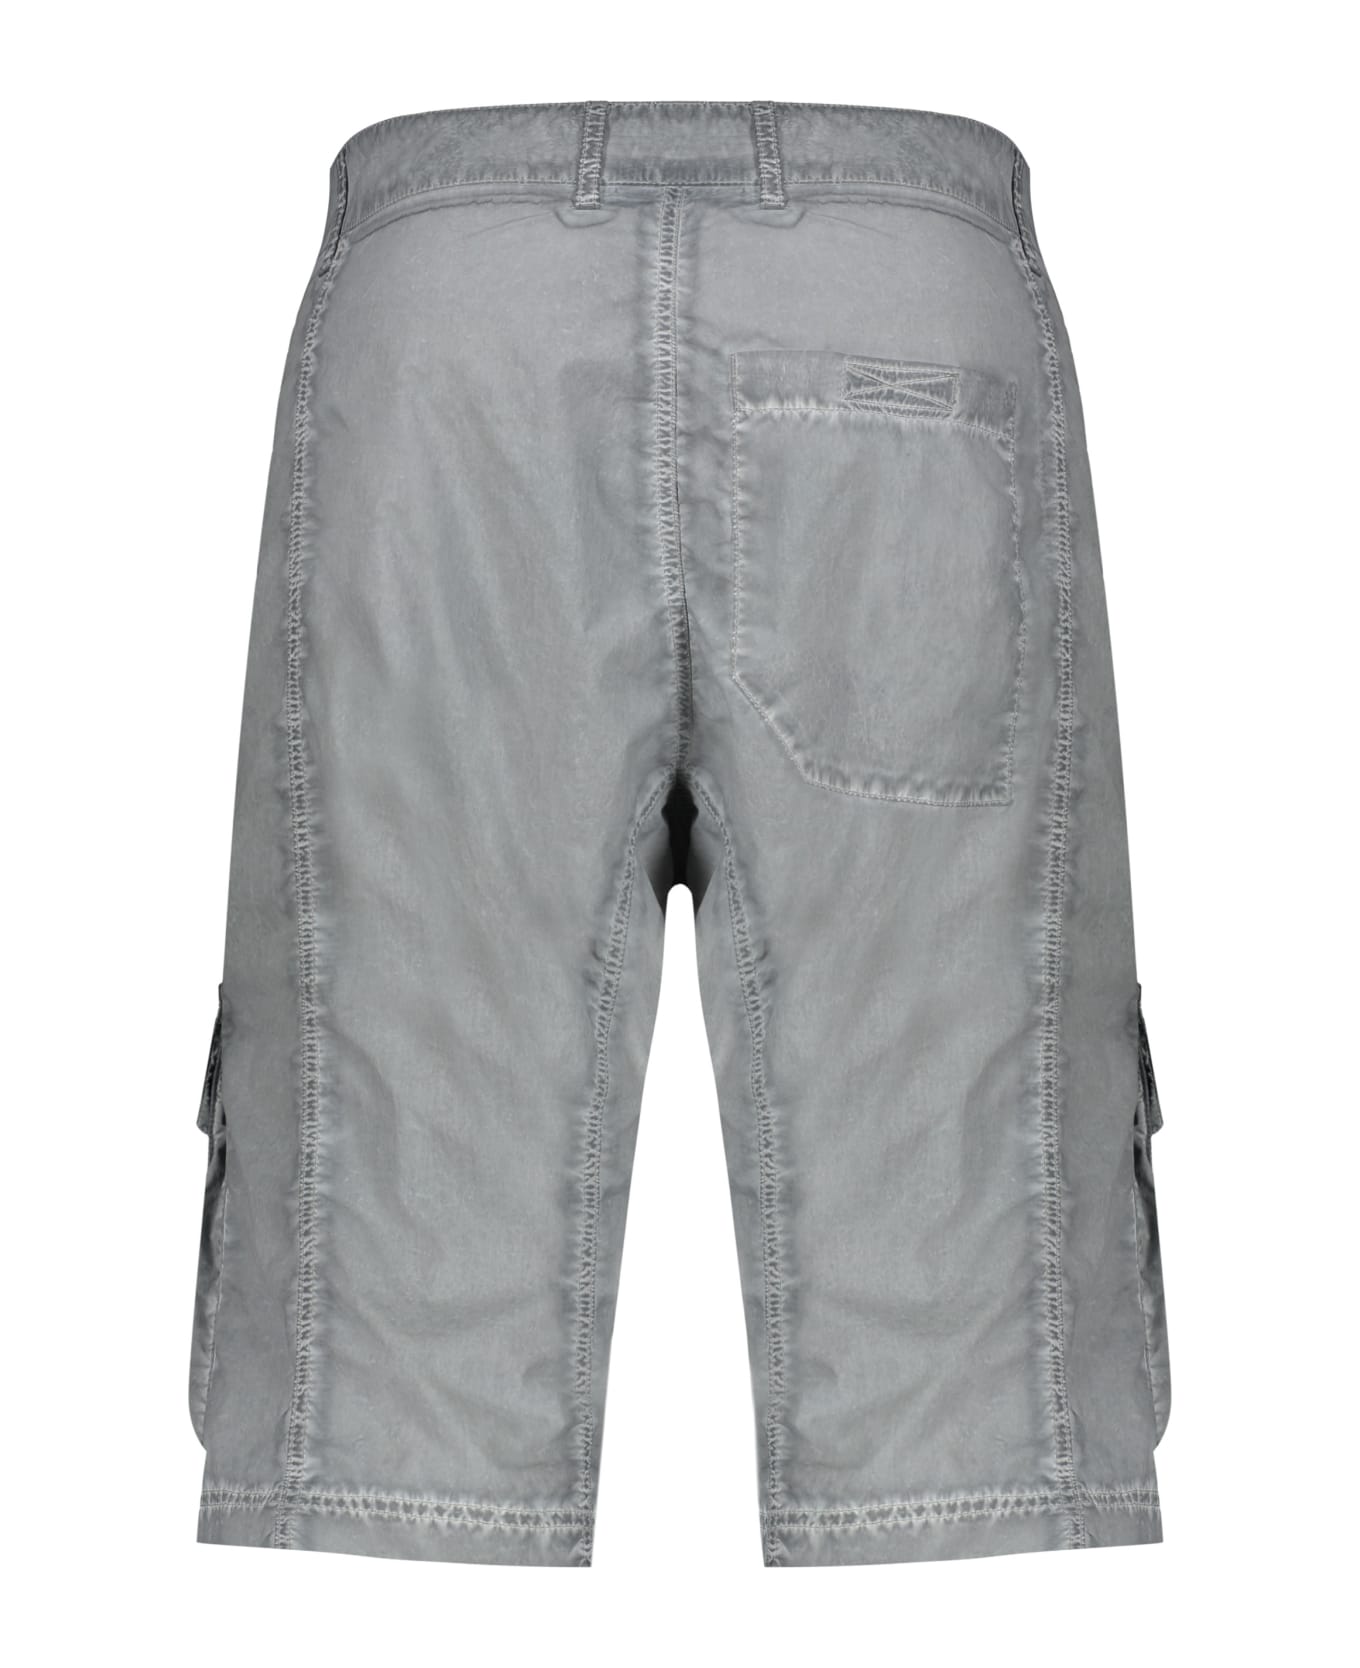 44 Label Group Techno Fabric Bermuda-shorts - grey